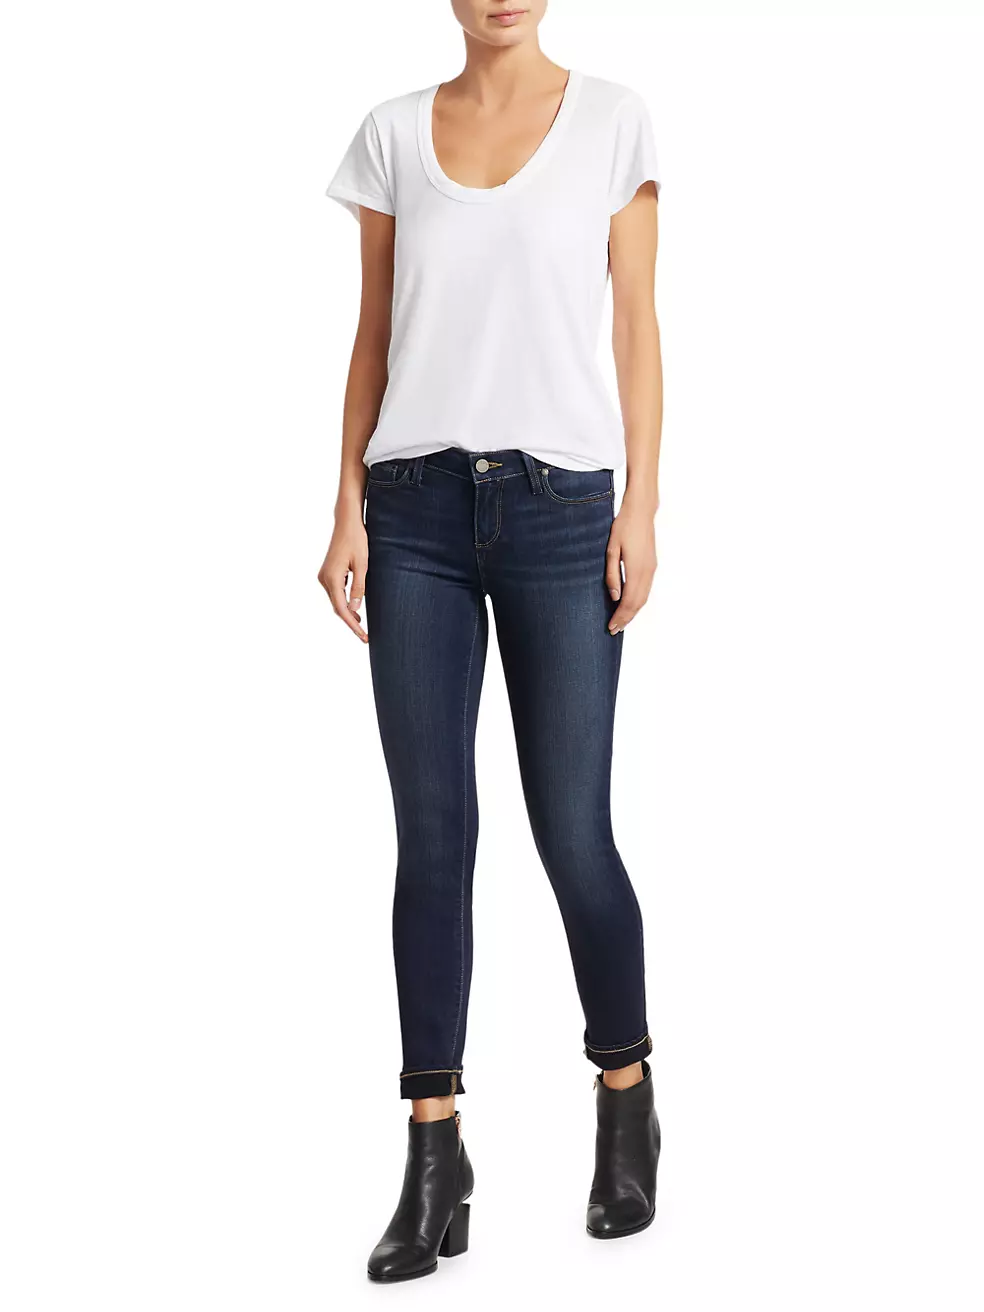 Shop Paige Verdugo Transcend Mid-Rise Ankle Skinny Jeans | Saks